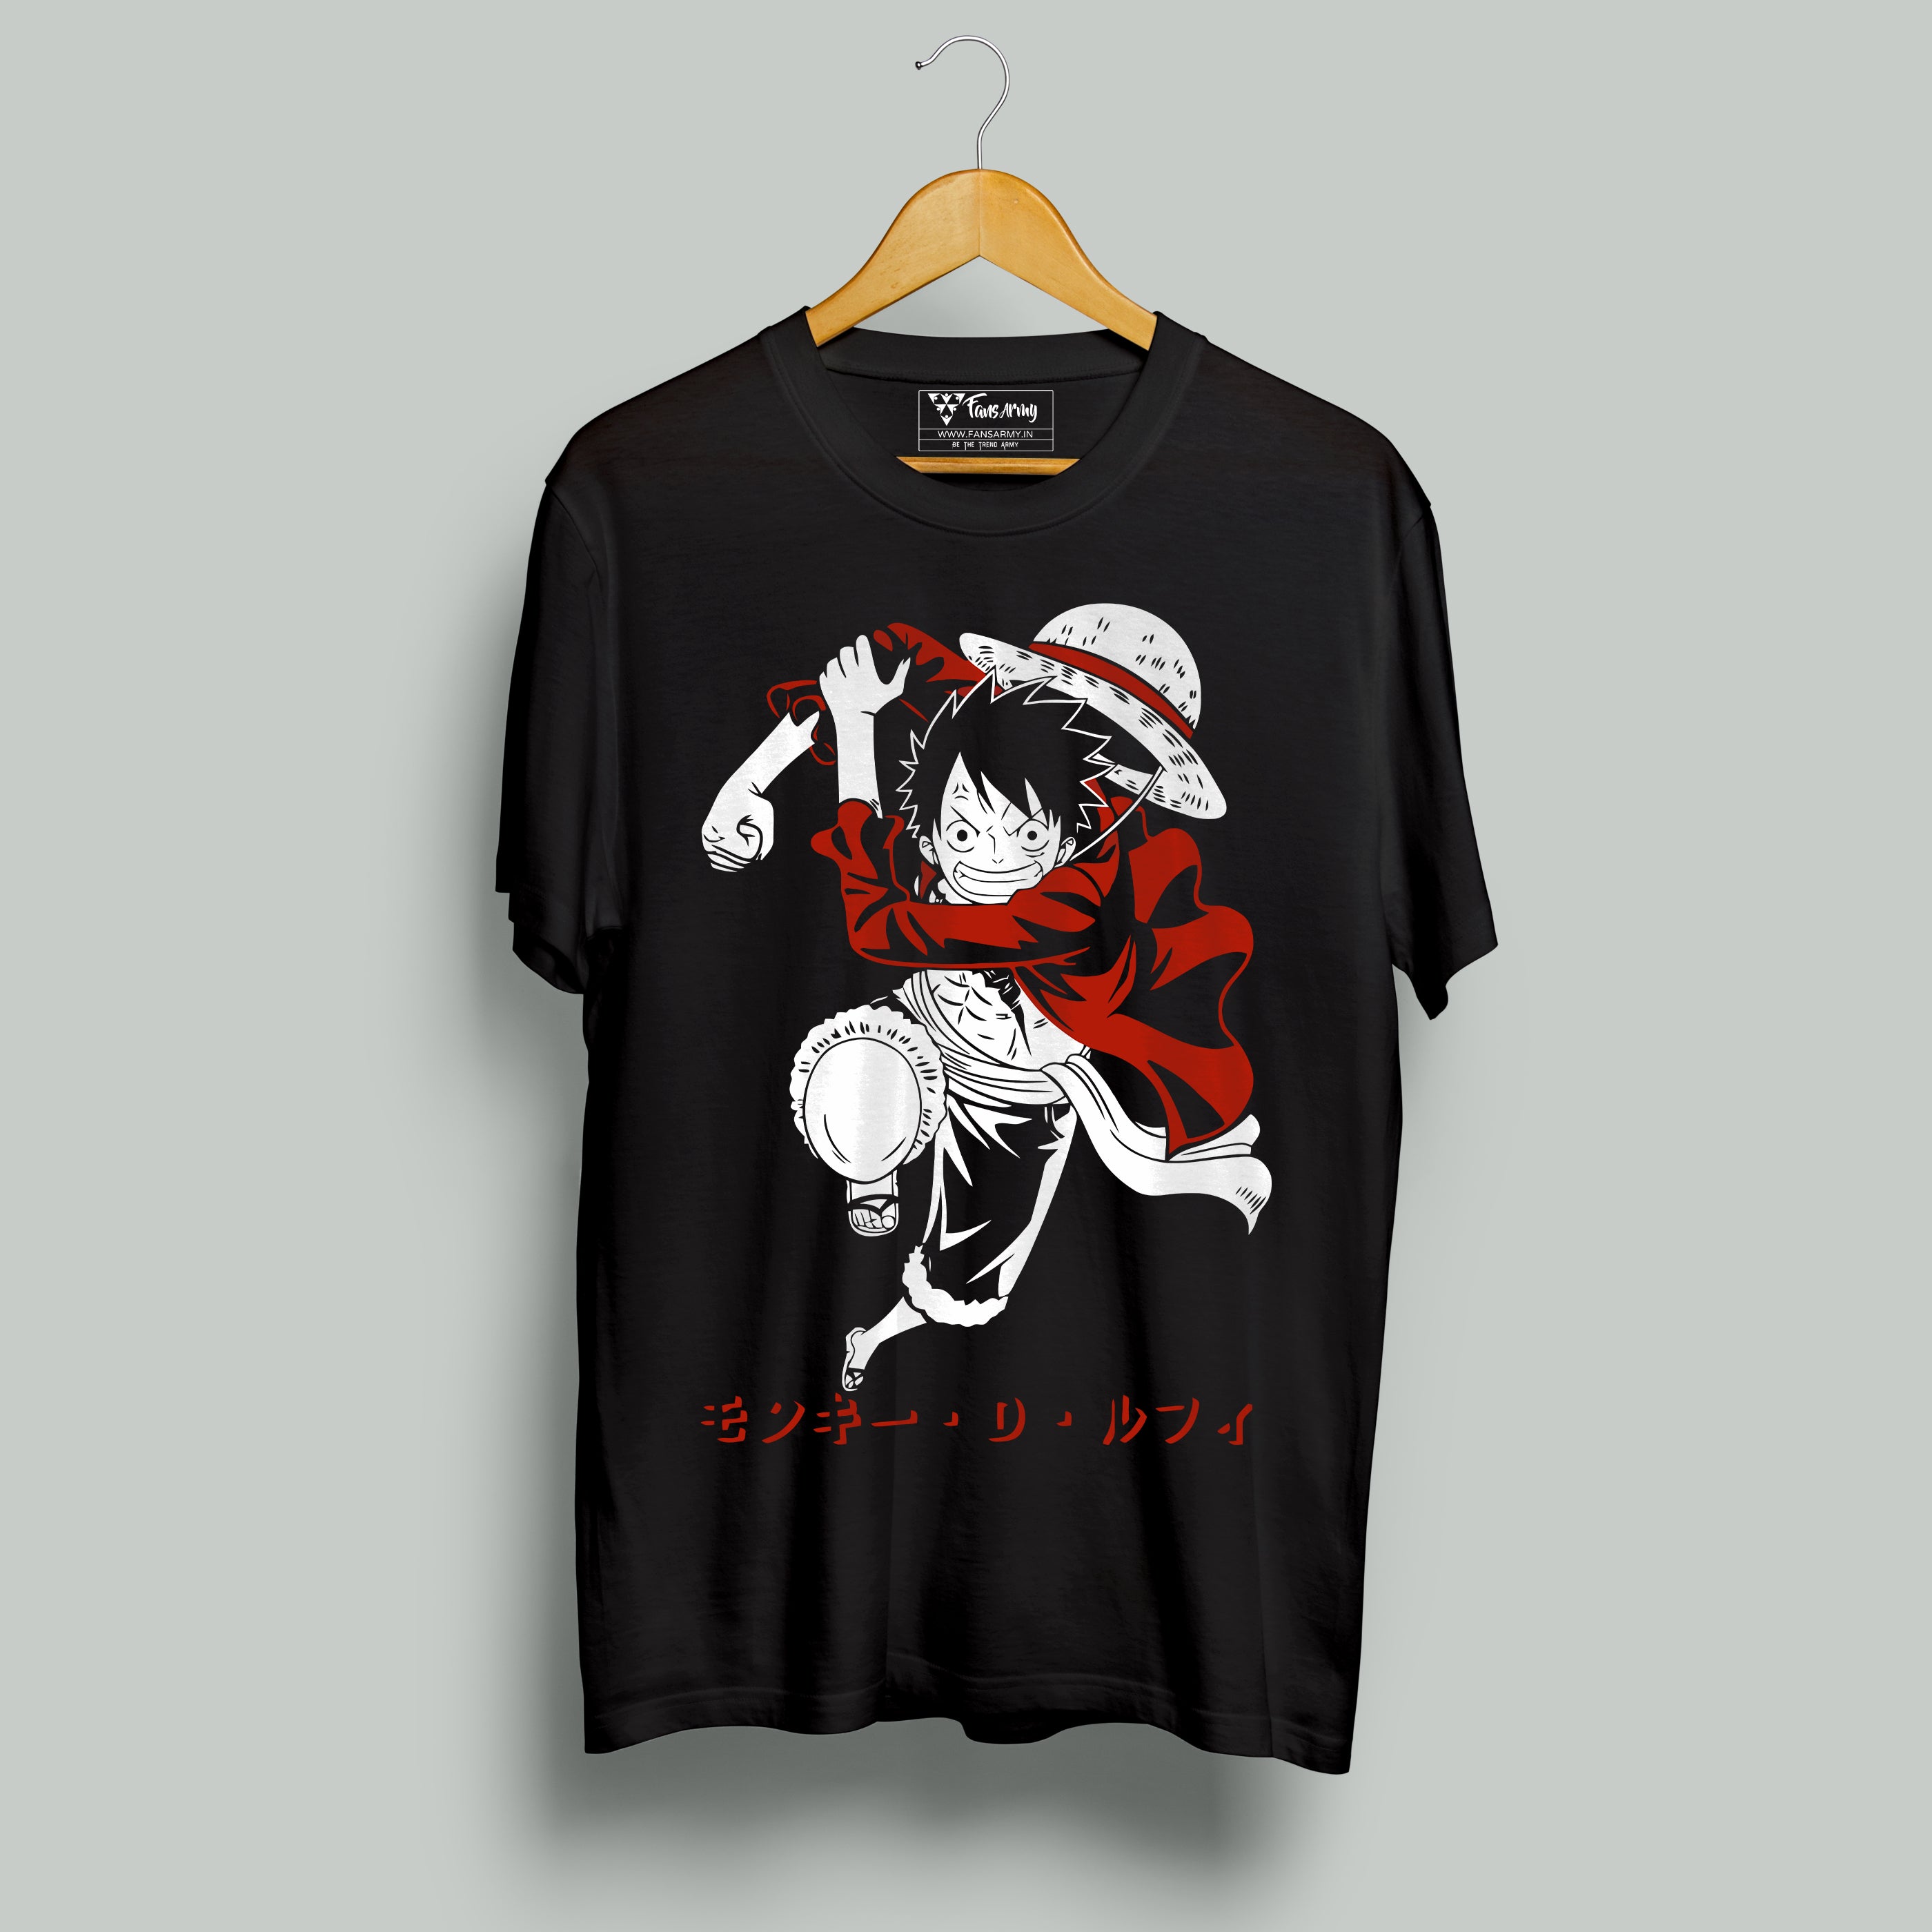 Anime T shirts Online India  Anime Merchandise India  Redwolf